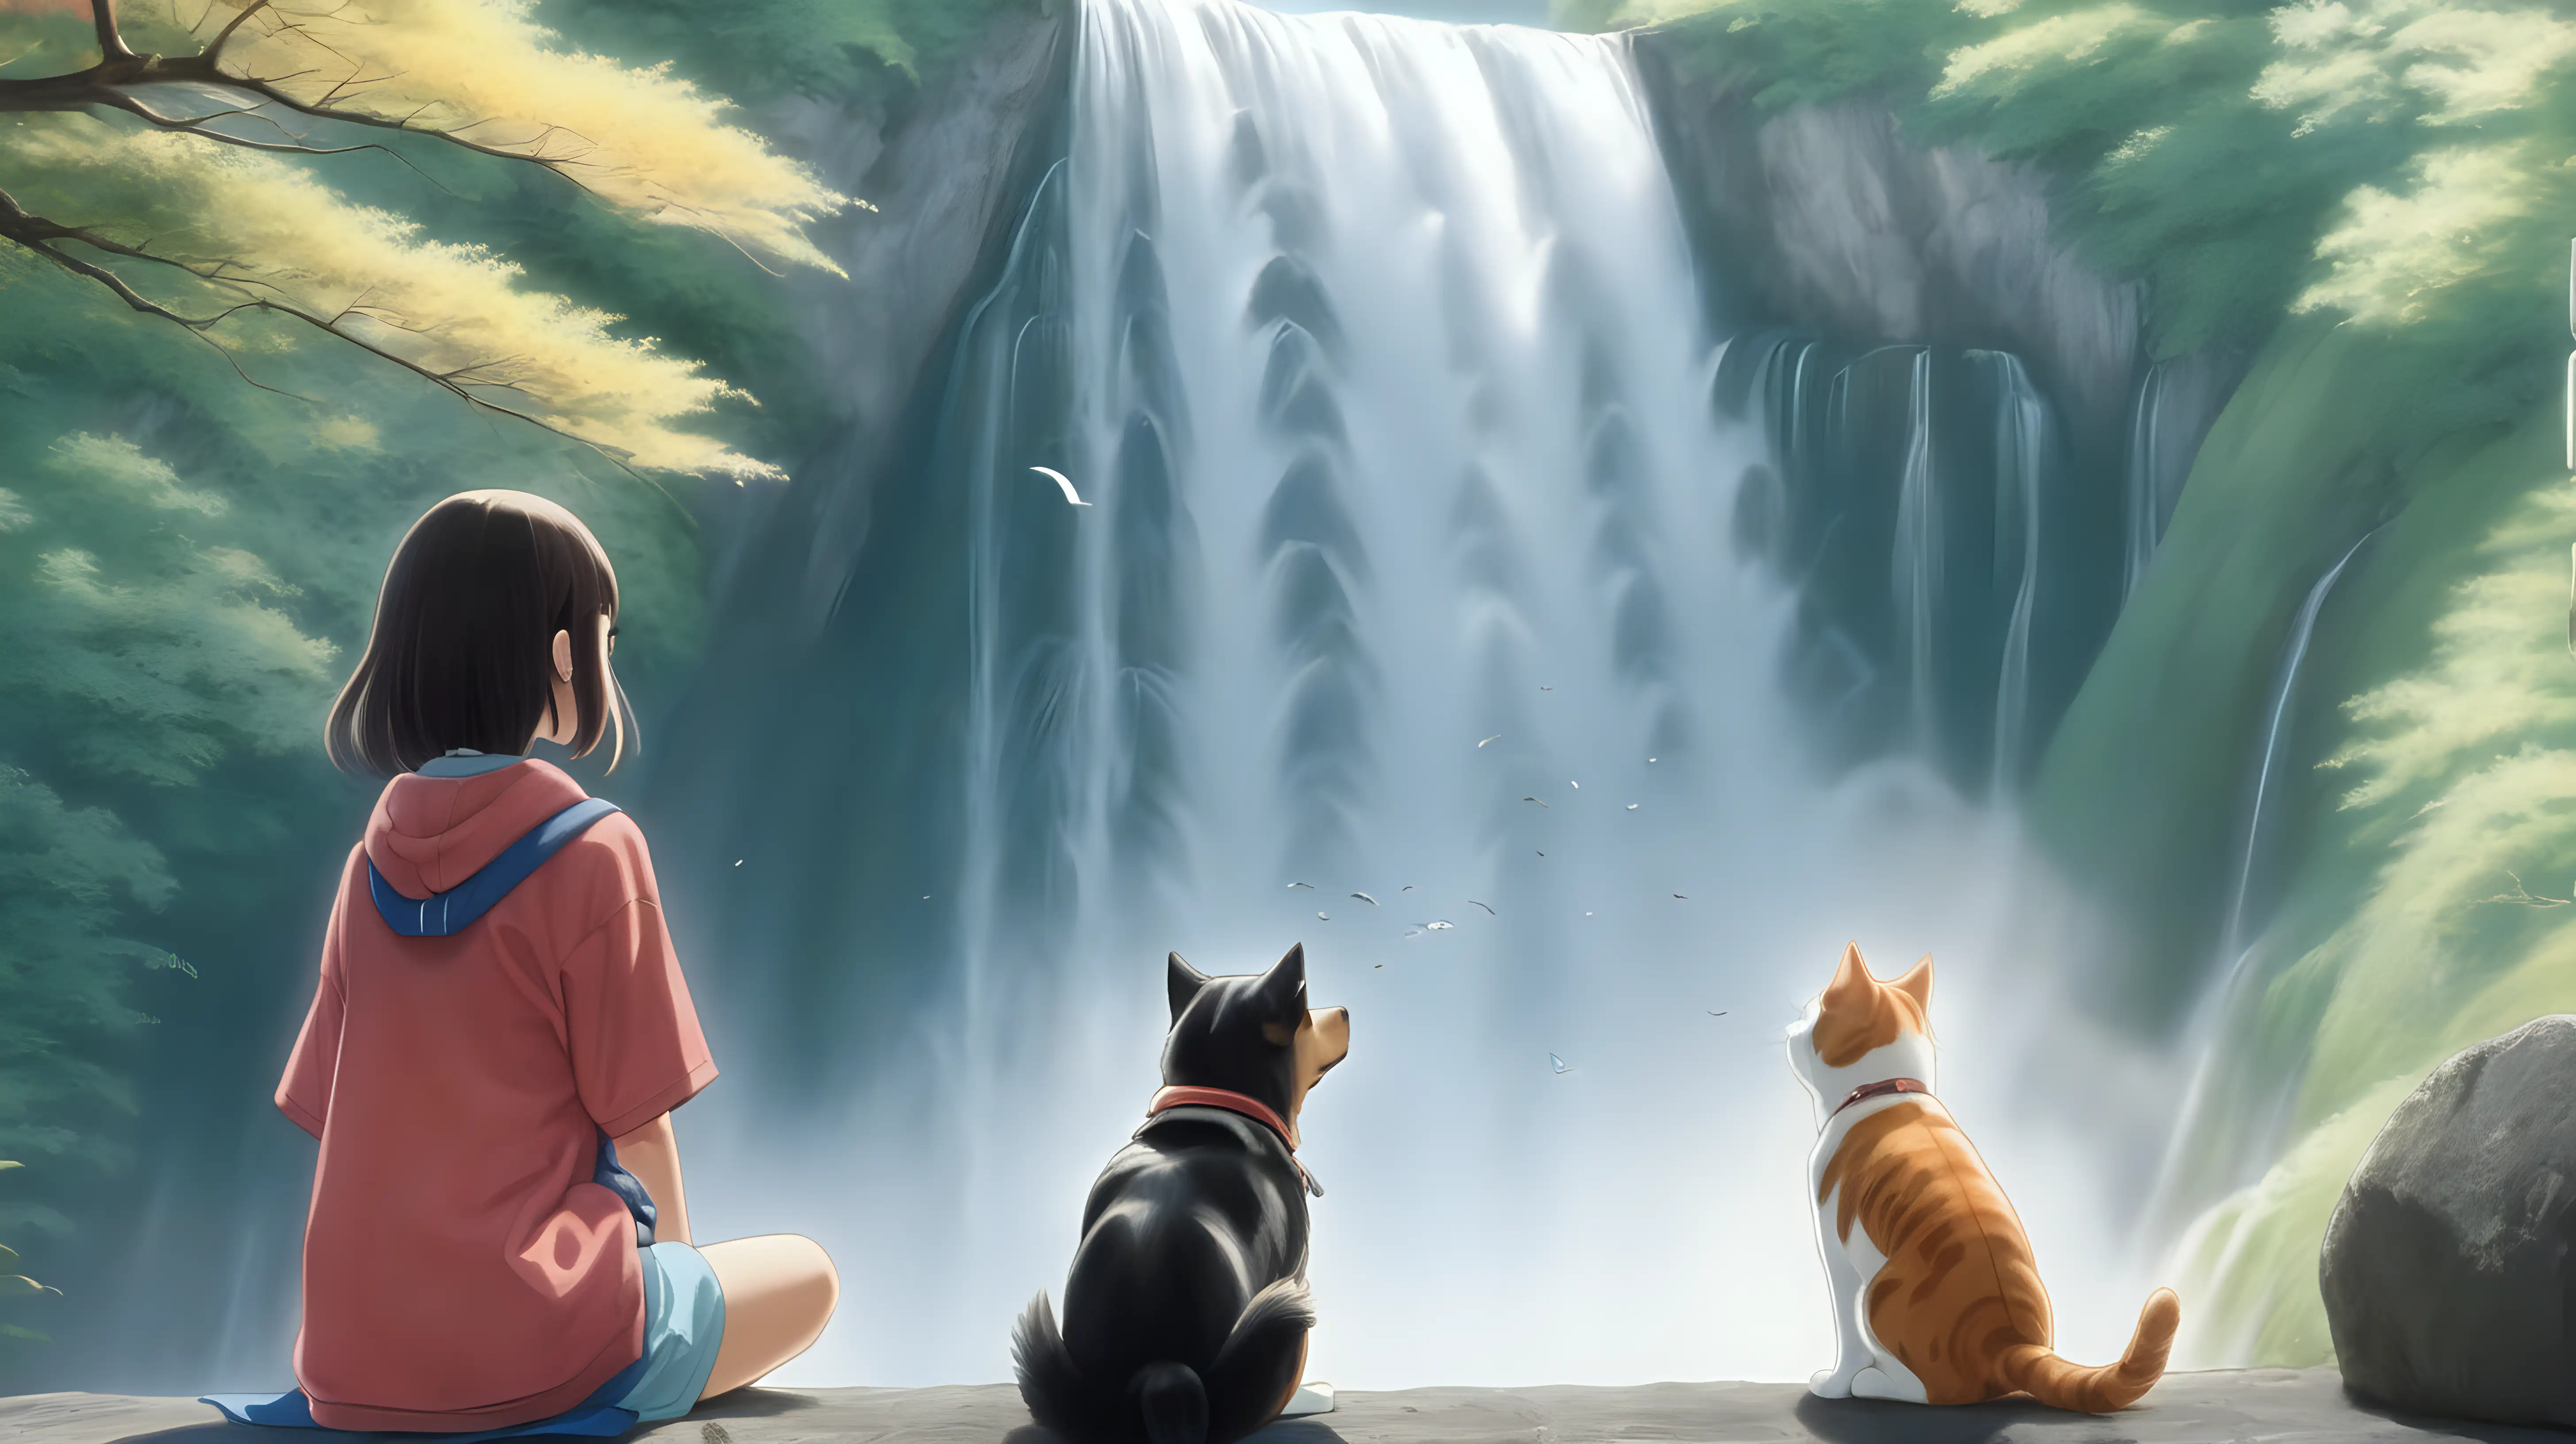 Waterfalls by AnimeSaint369 on DeviantArt